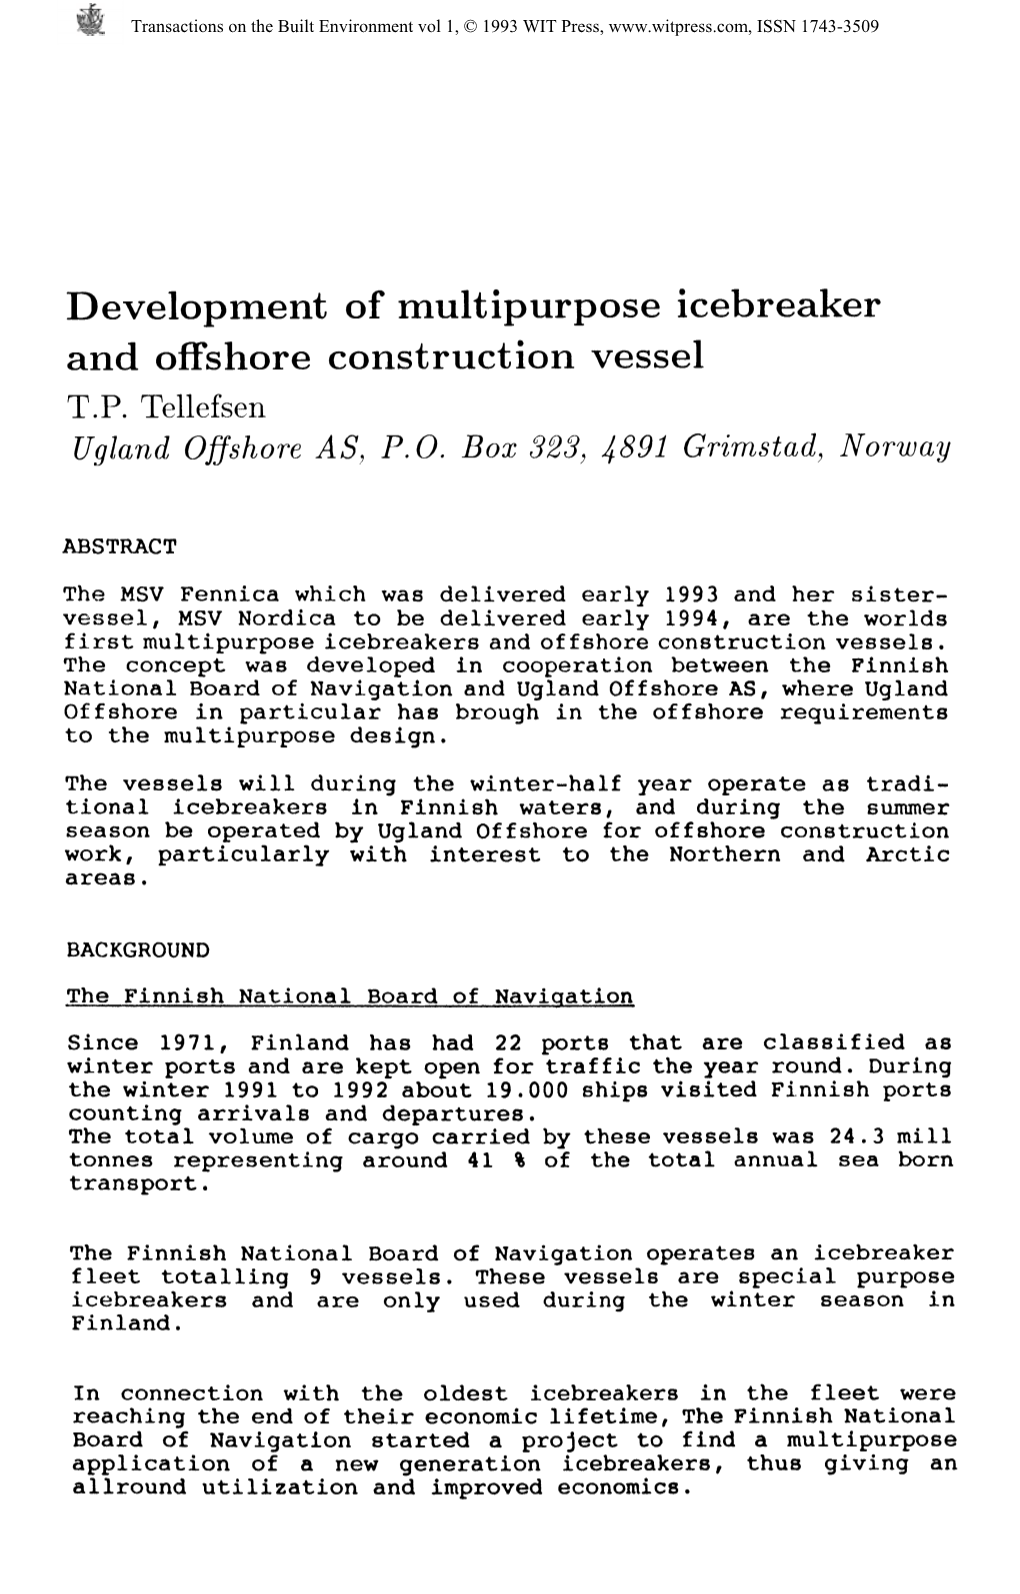 Development of Multipurpose Icebreaker and Offshore Construction Vessel